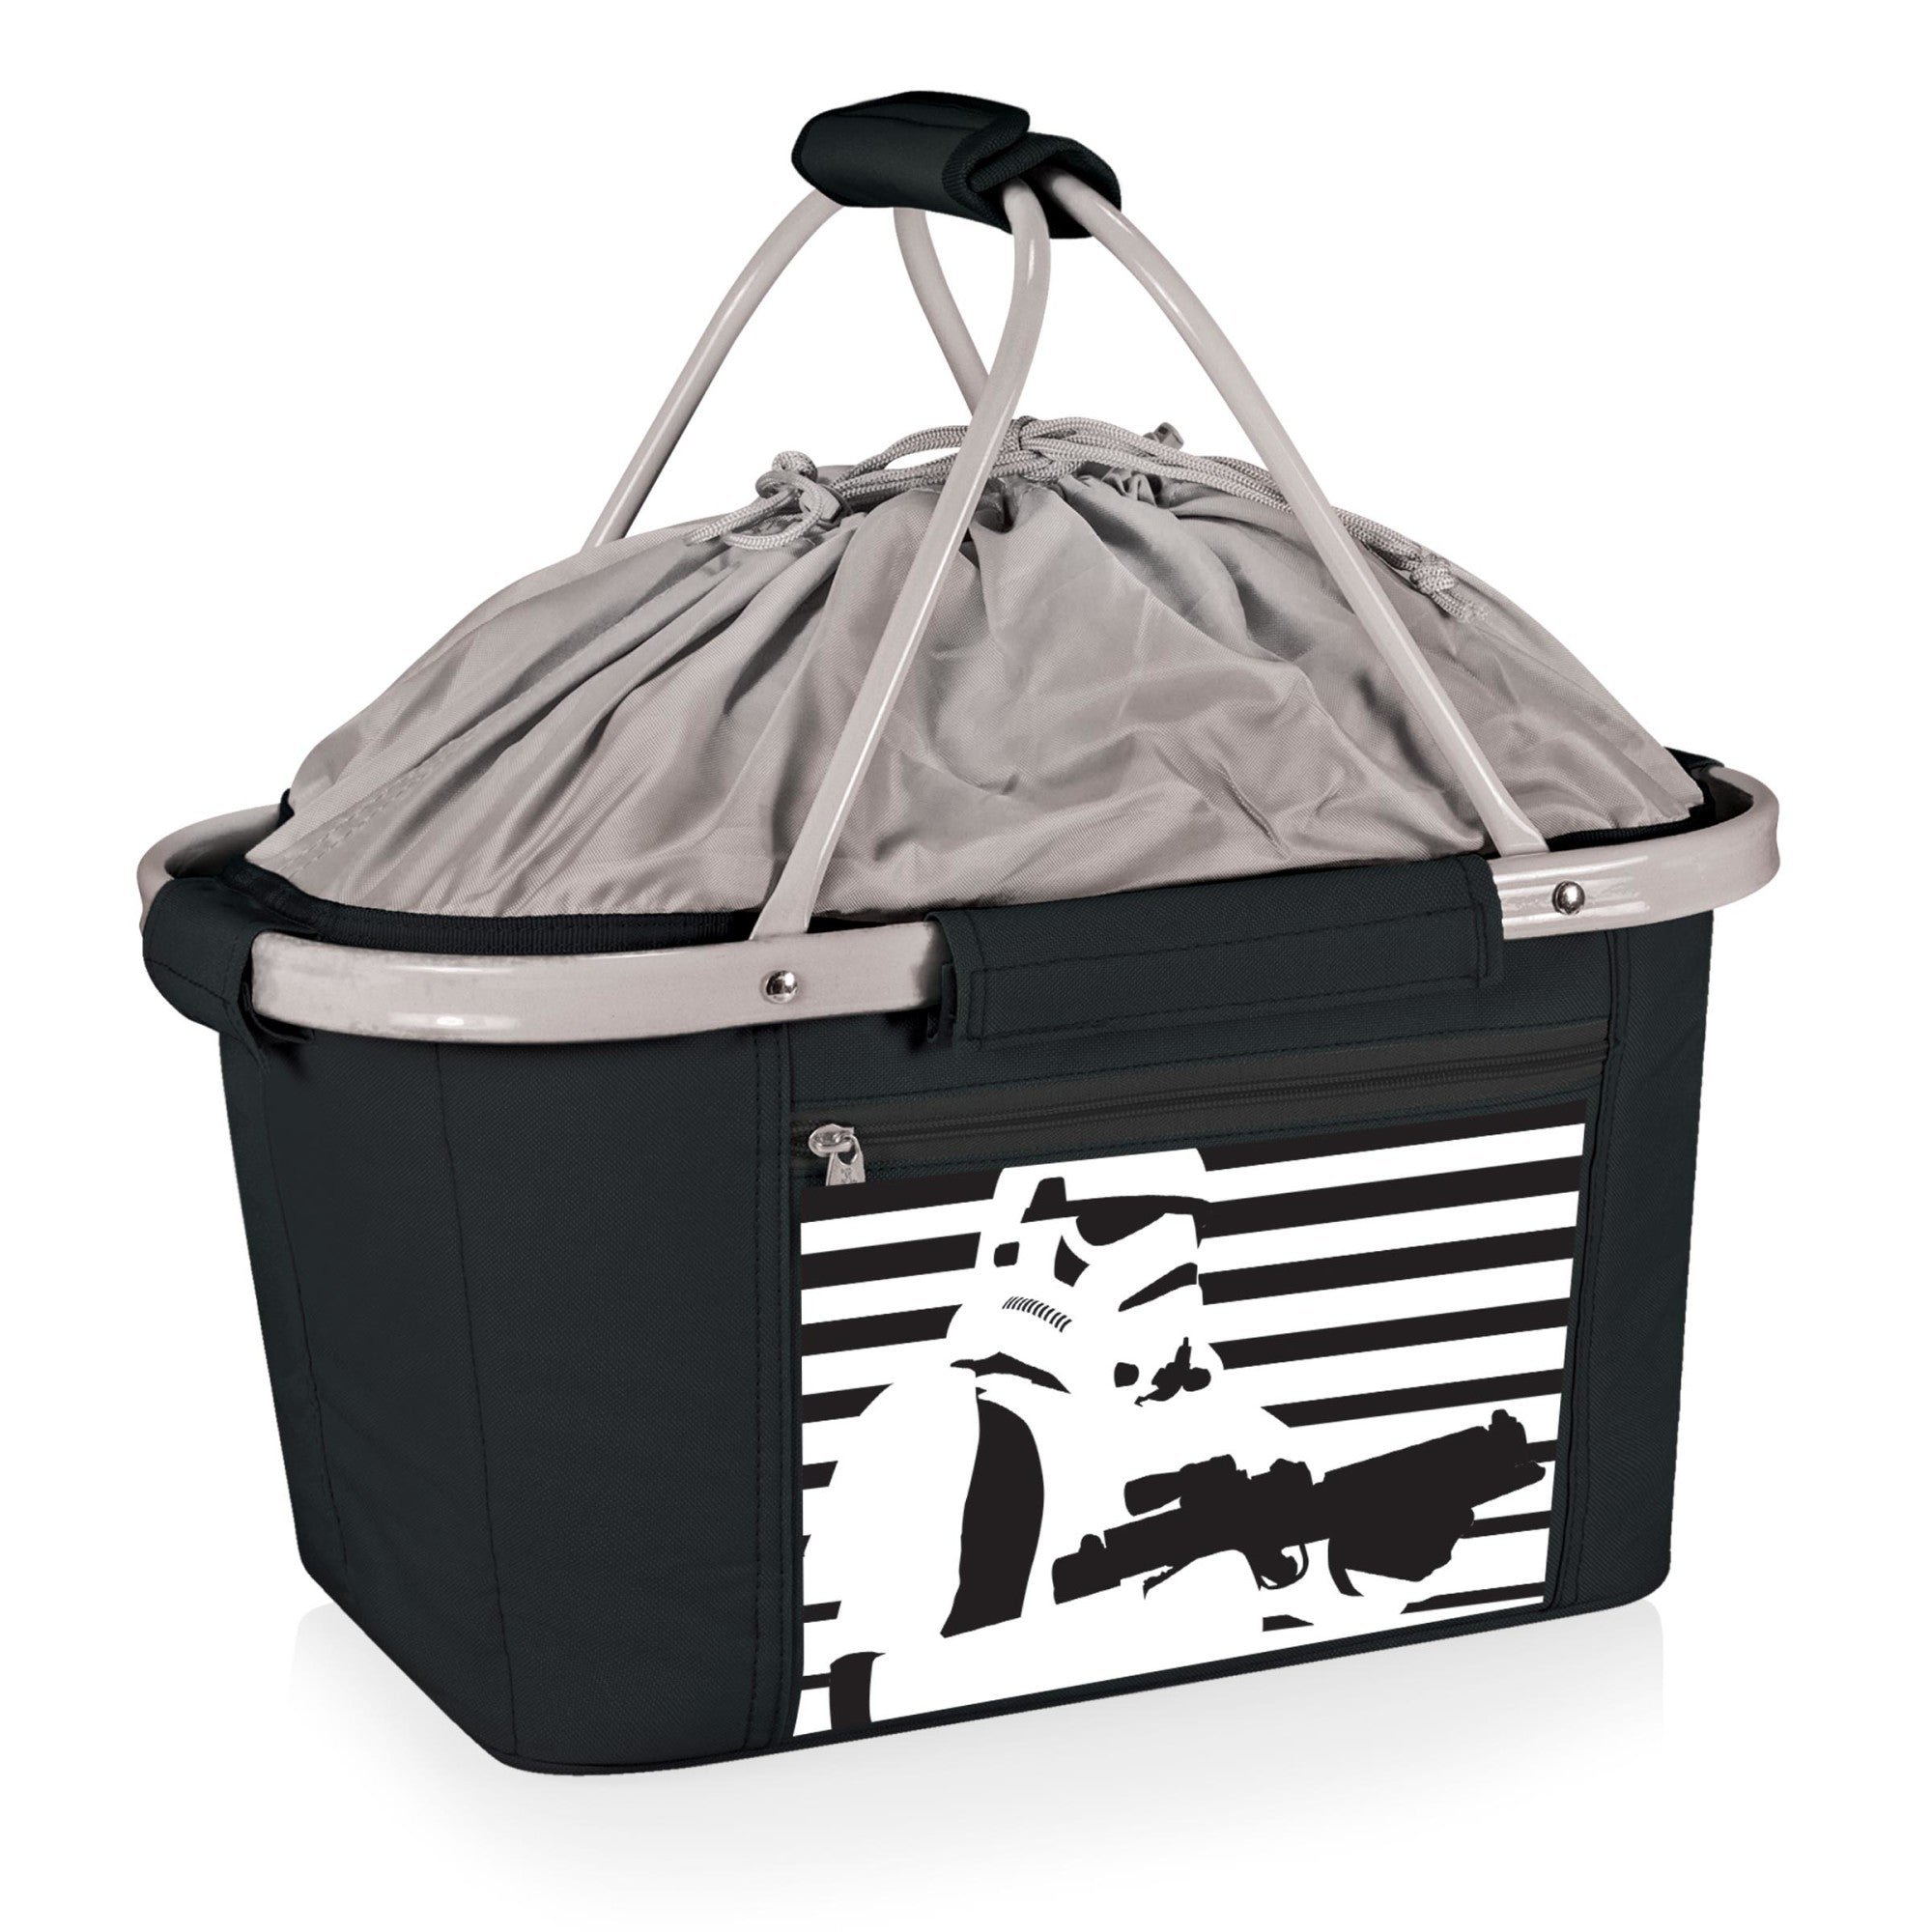 Storm Trooper - Star Wars - Metro Basket Collapsible Cooler Tote